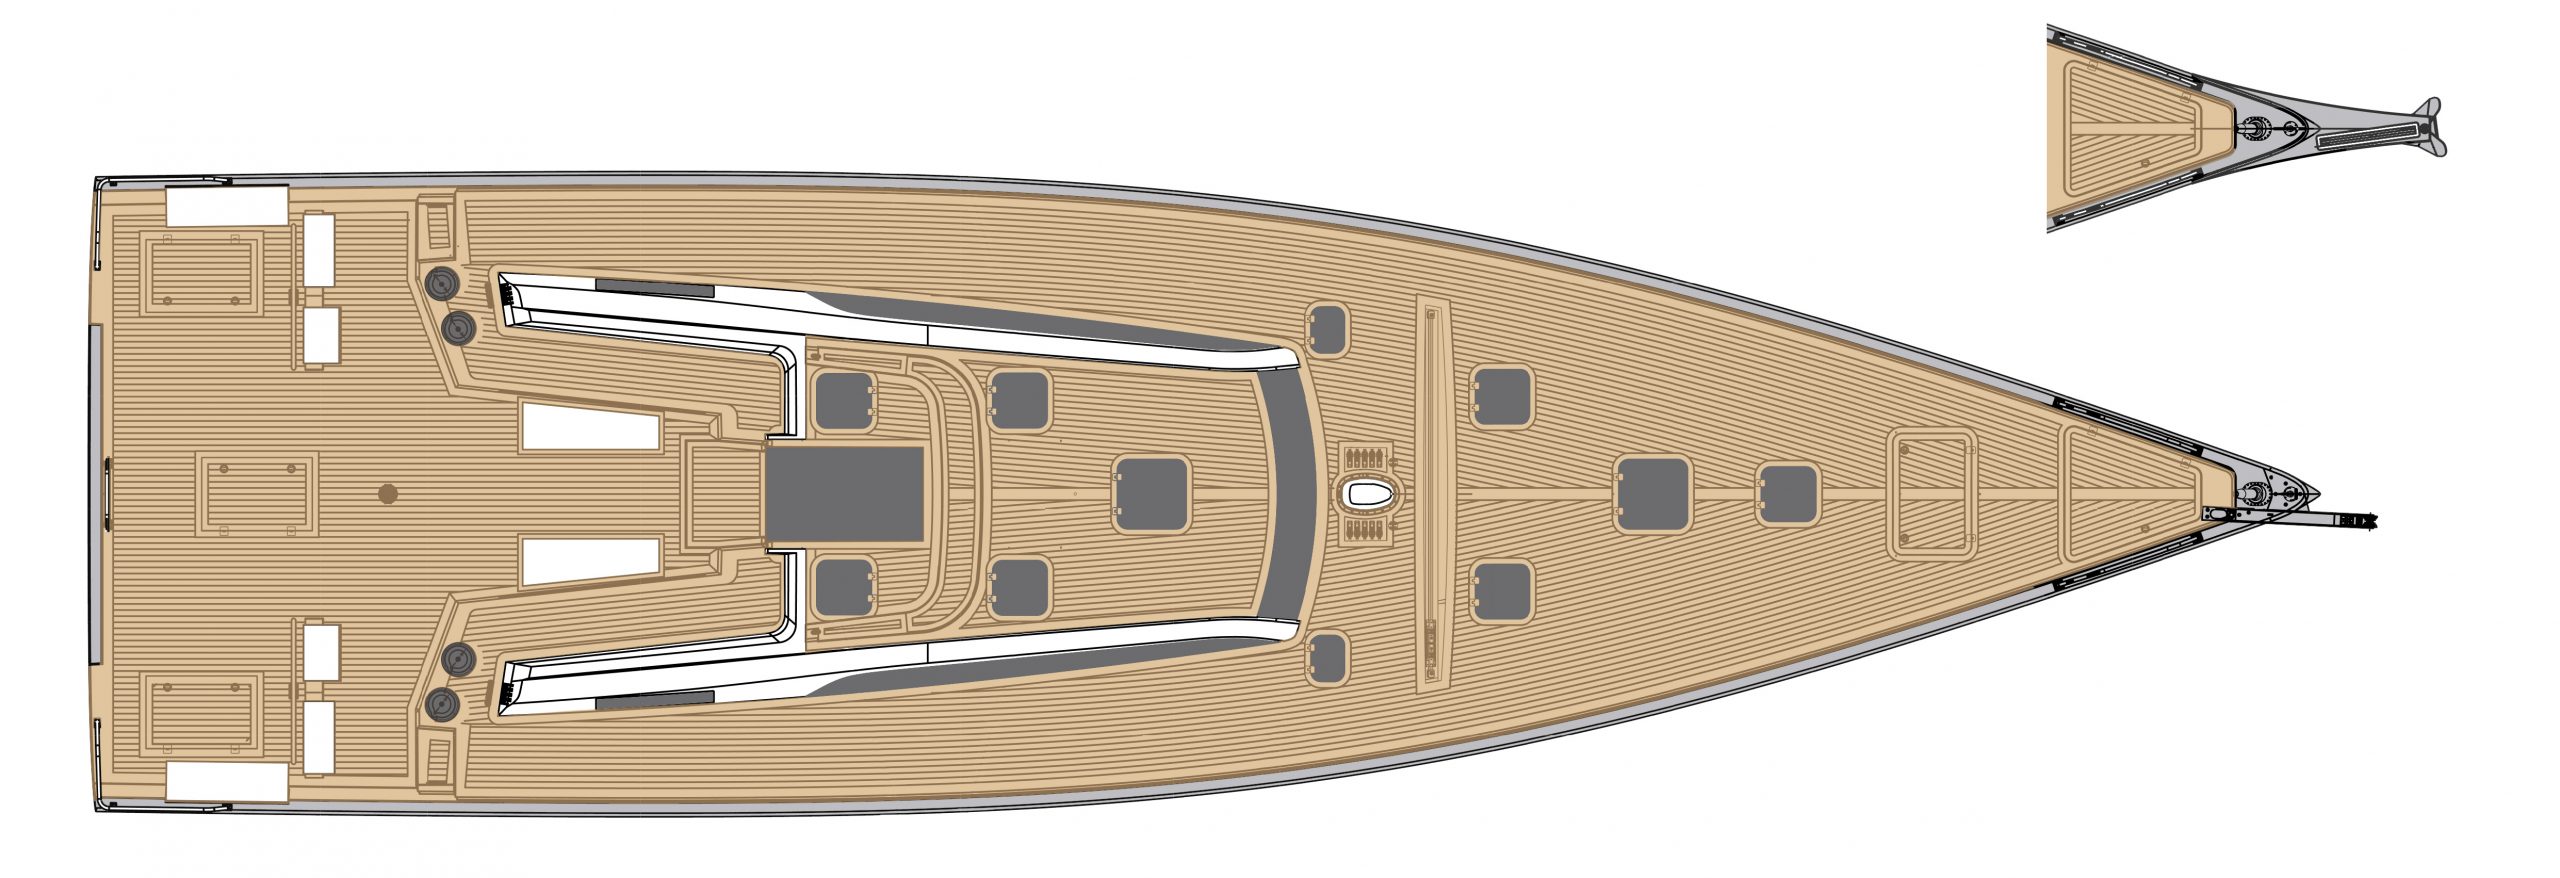 solar yacht 60